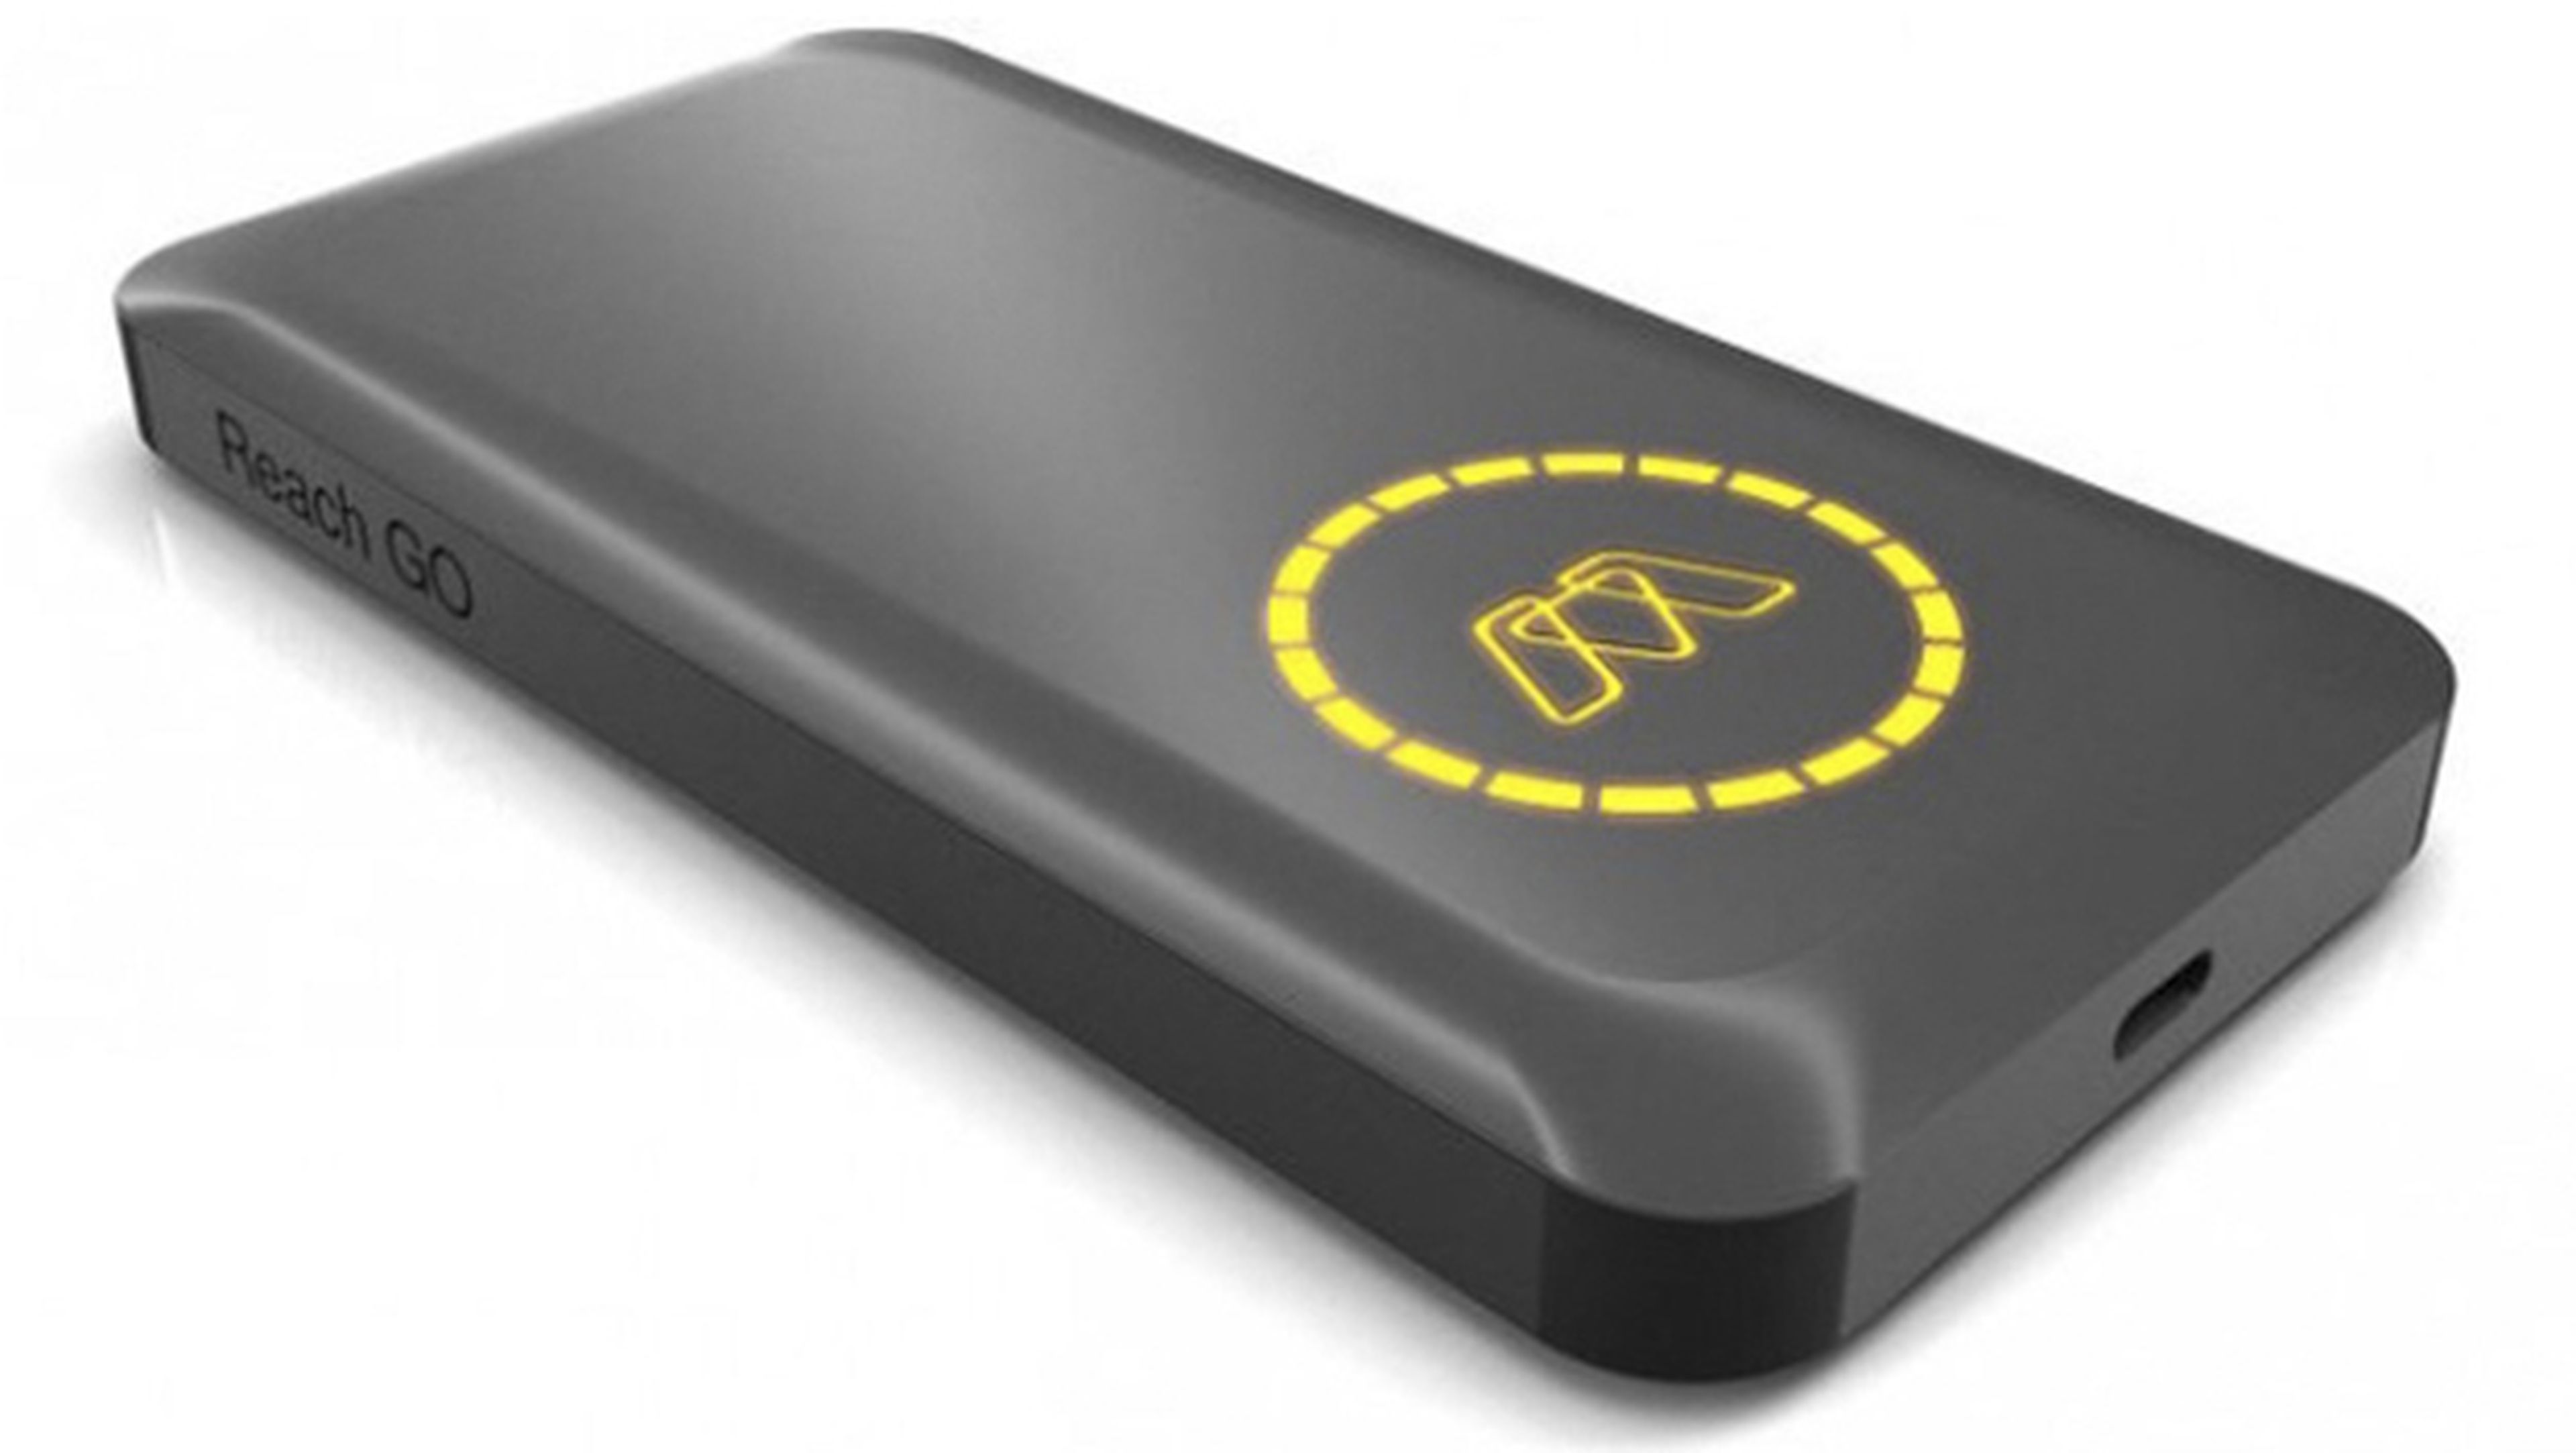 Batería externa USB - C carga el portátil a alta velocidad